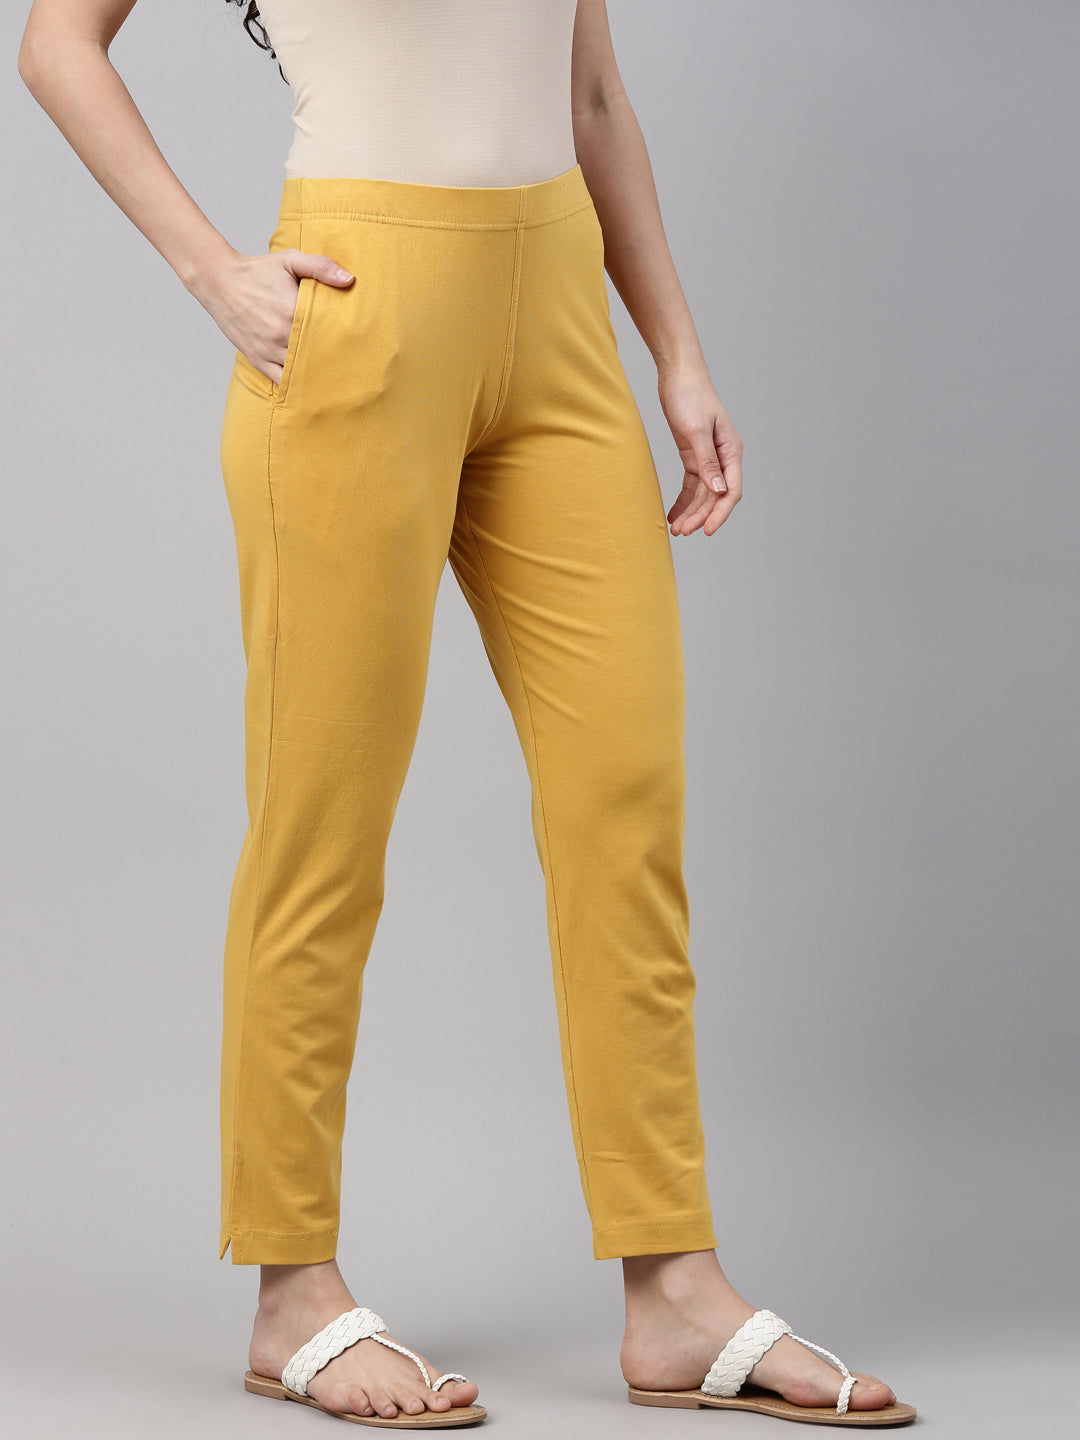 7+ Beautiful Kurti with Jeans Style Ideas 2023 - Best Jeans & Kurti Design